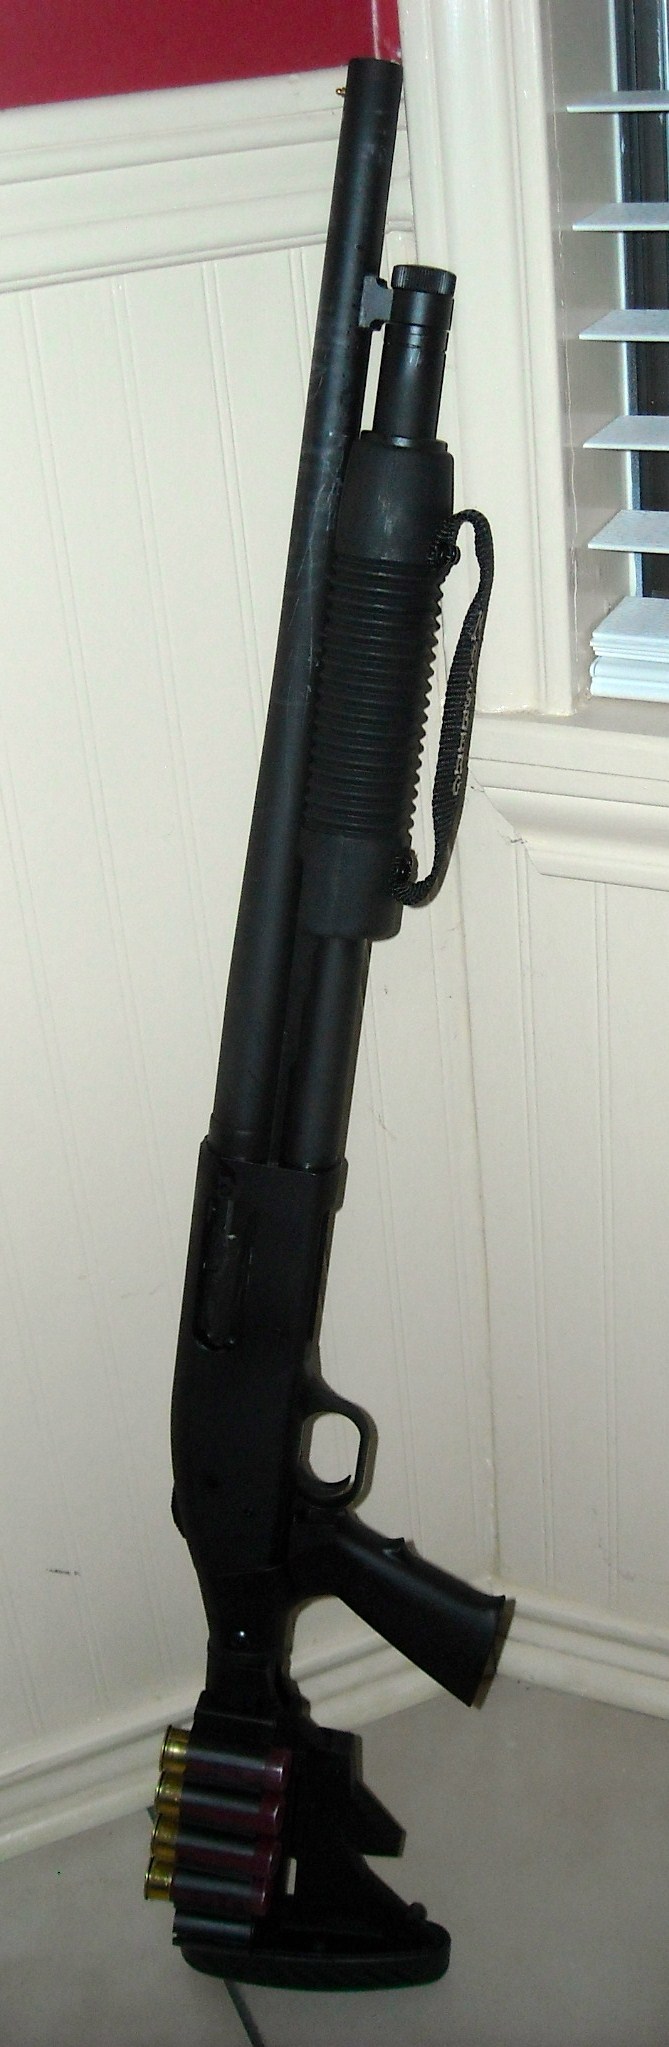 This is an image of a shotgun - Best Handgun for Home Defense